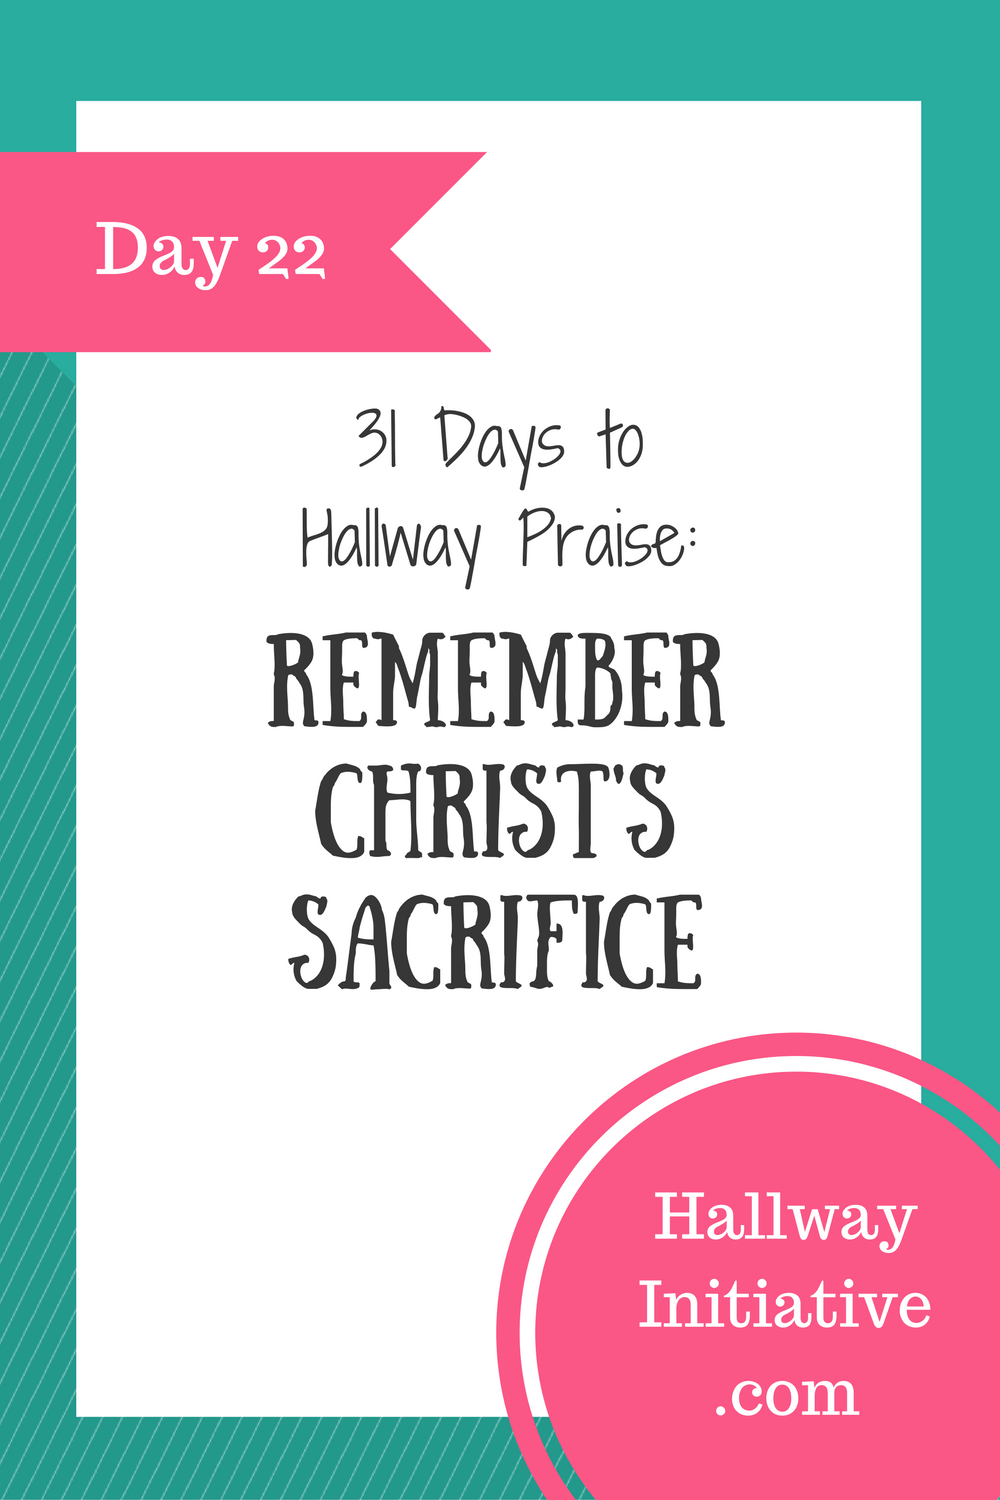 Day 22: remember Christ's sacrifice